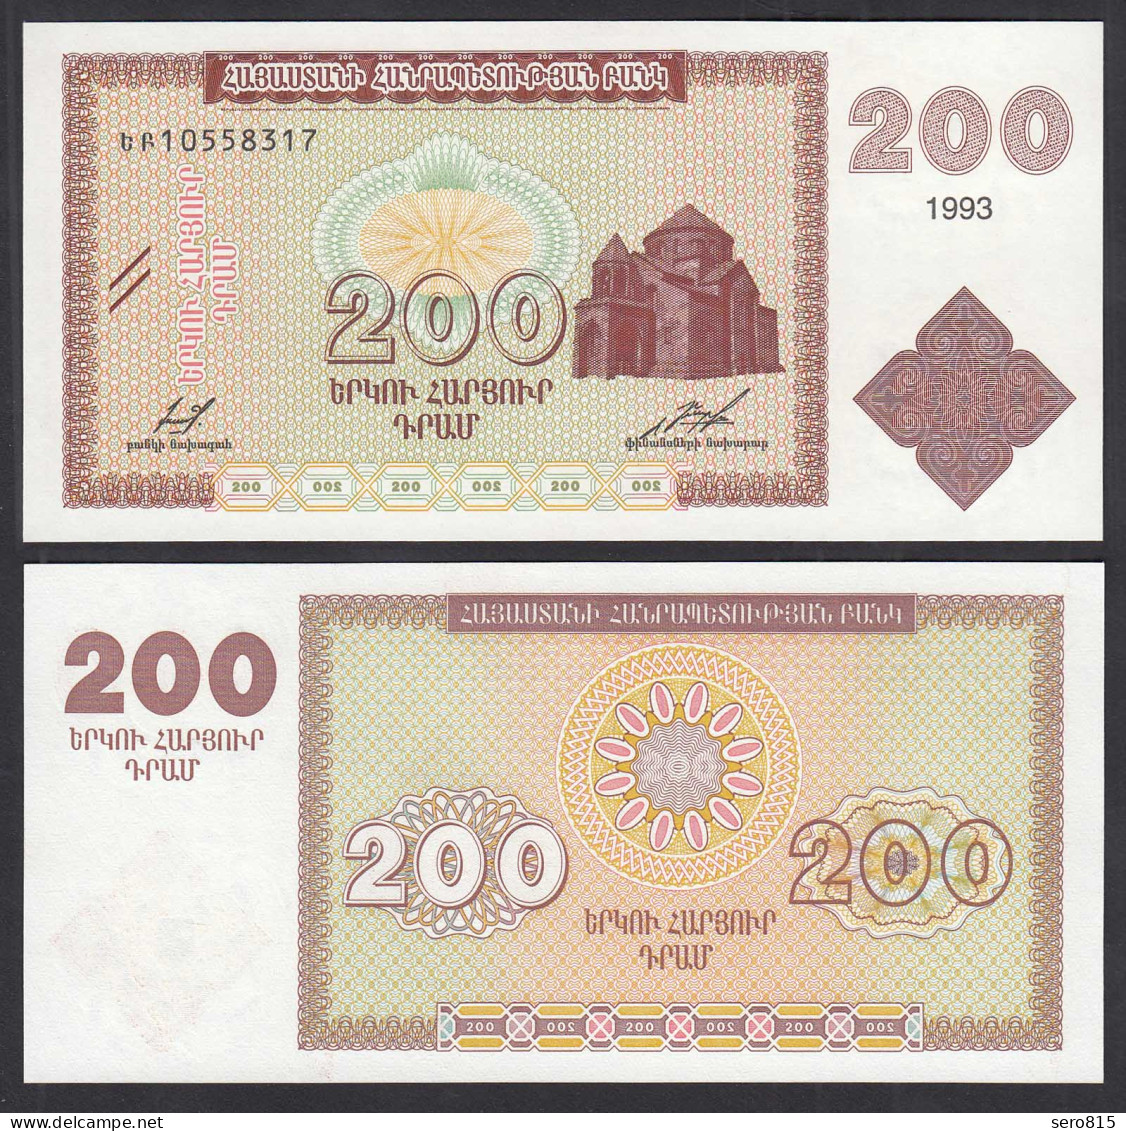 Armenien - Armenia 200 Dram Banknoten 1993 UNC Pick 37  (31923 - Other - Asia